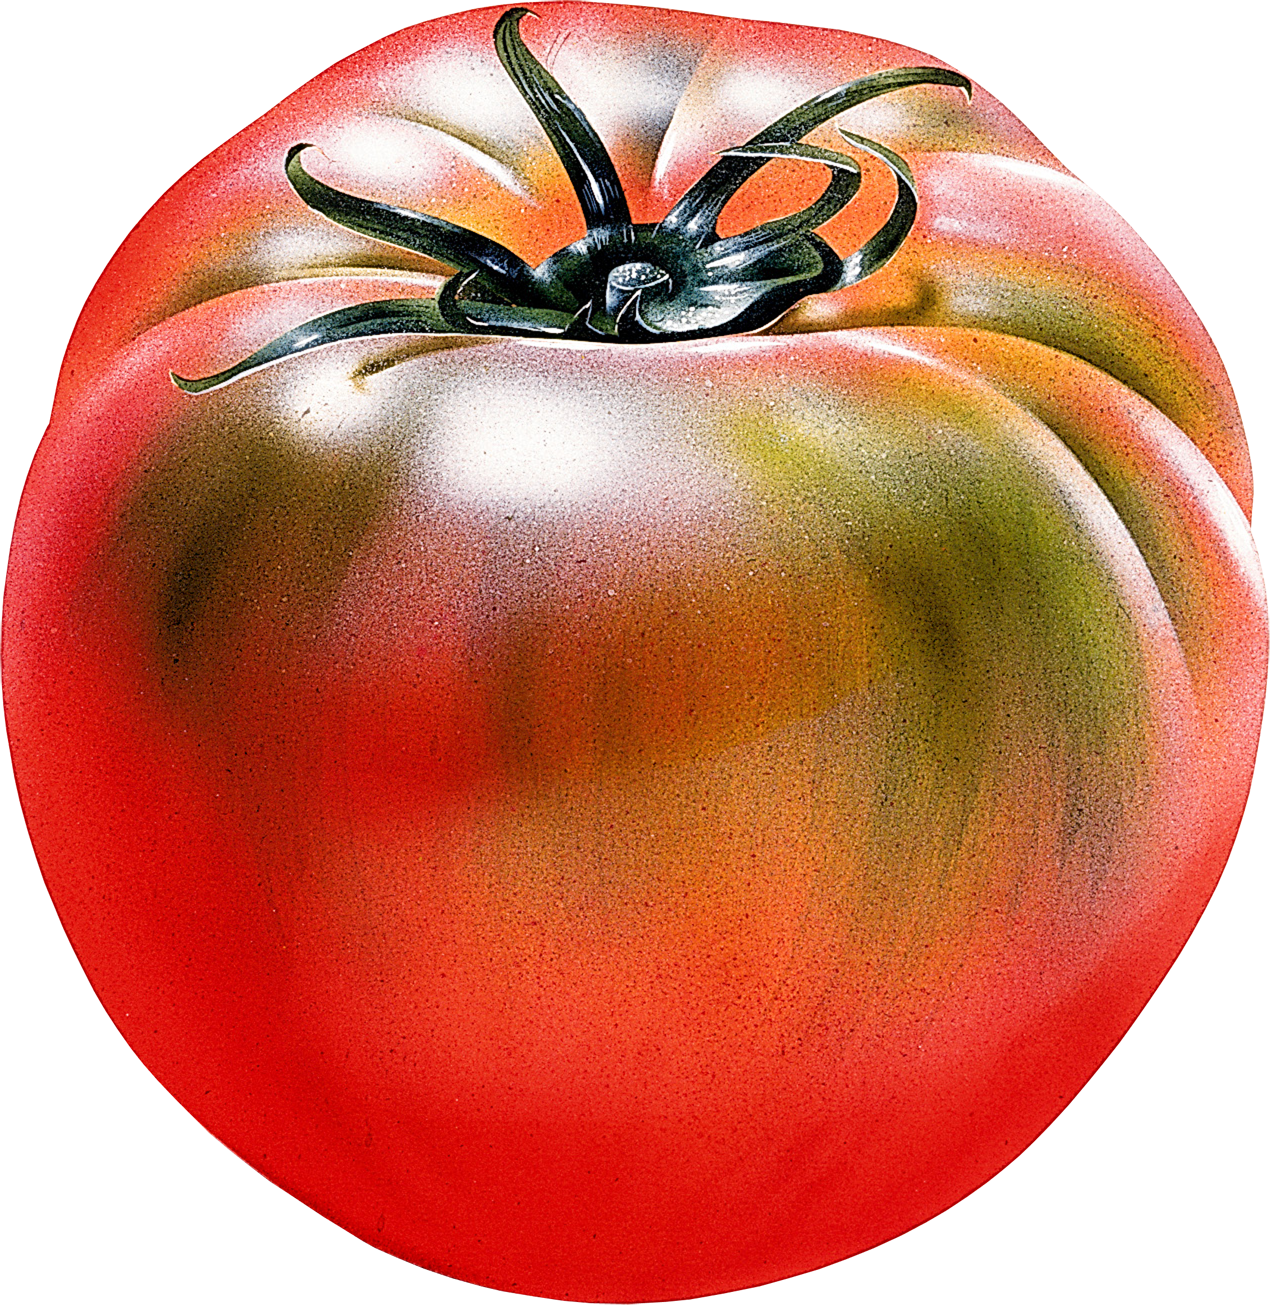 Large freash tomato PNG transparent background